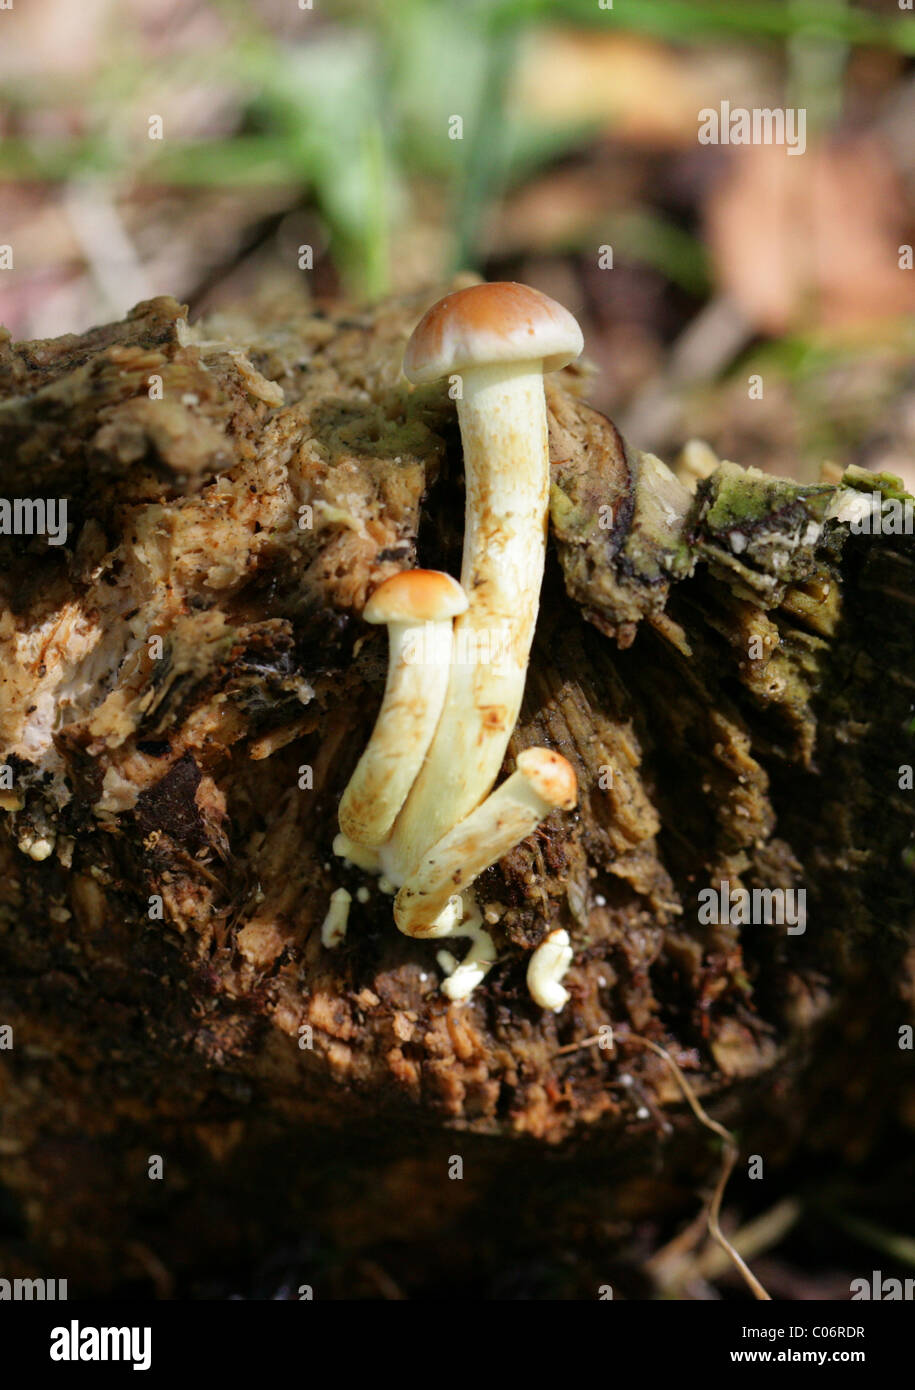 Young Fungi, Cortinarius sp., Cortinariaceae. Possibly Cortinarius (Telamonia) rigens. Stock Photo